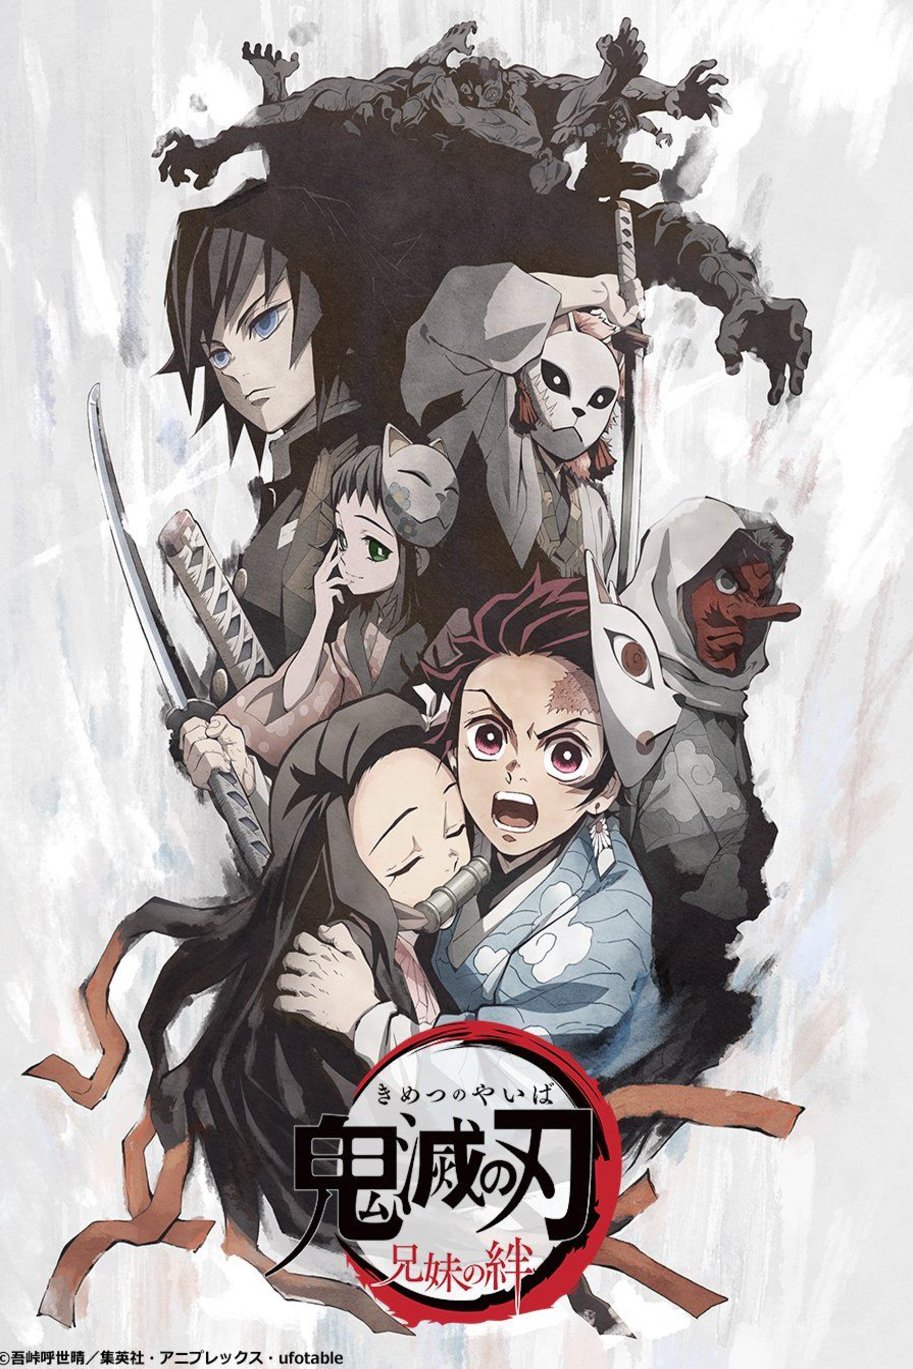 Japanese poster of the movie Demon Slayer: Kimetsu no Yaiba Sibling's Bond